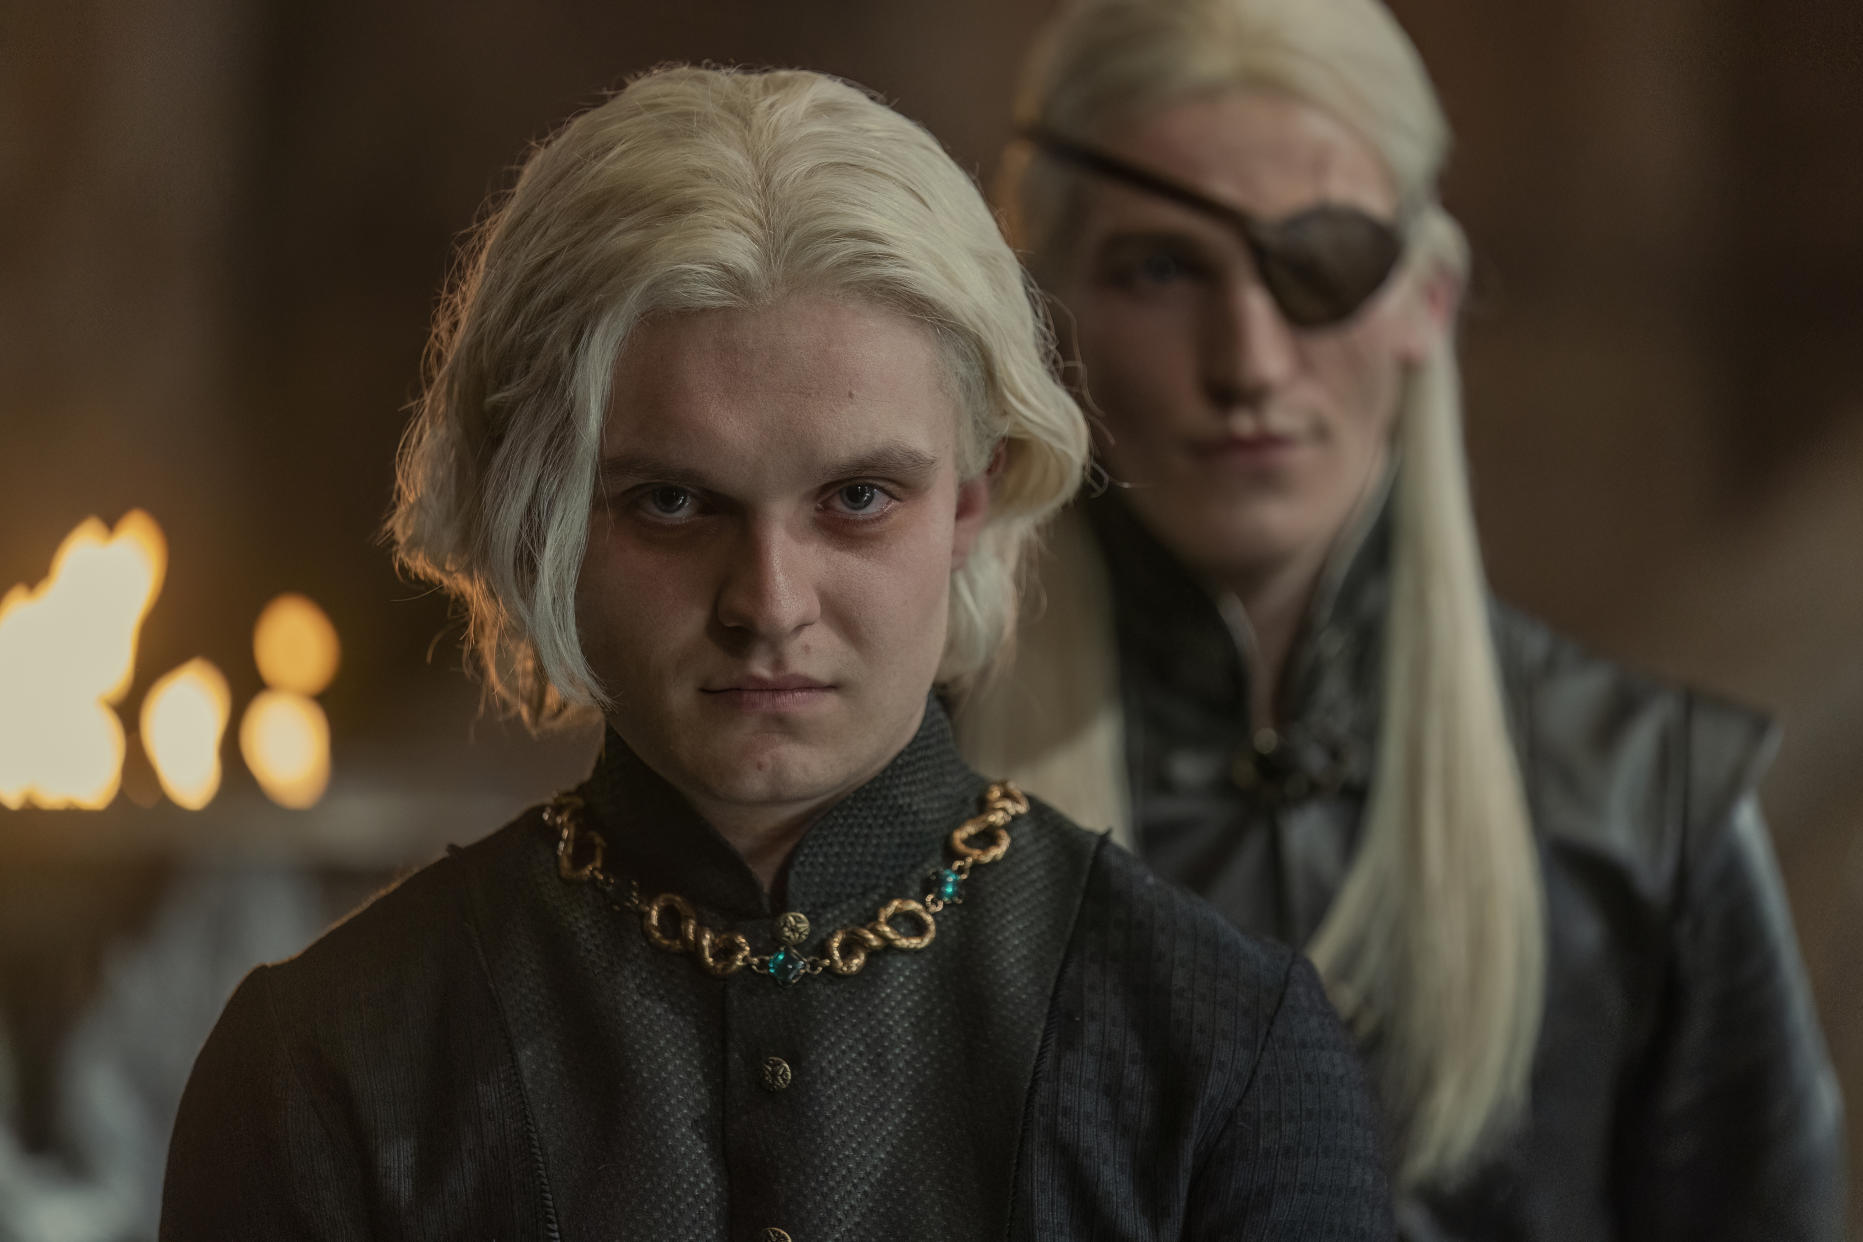 Tom Glynn-Carney as Prince Aegon Targaryen in House of the Dragon. (Sky/HBO)